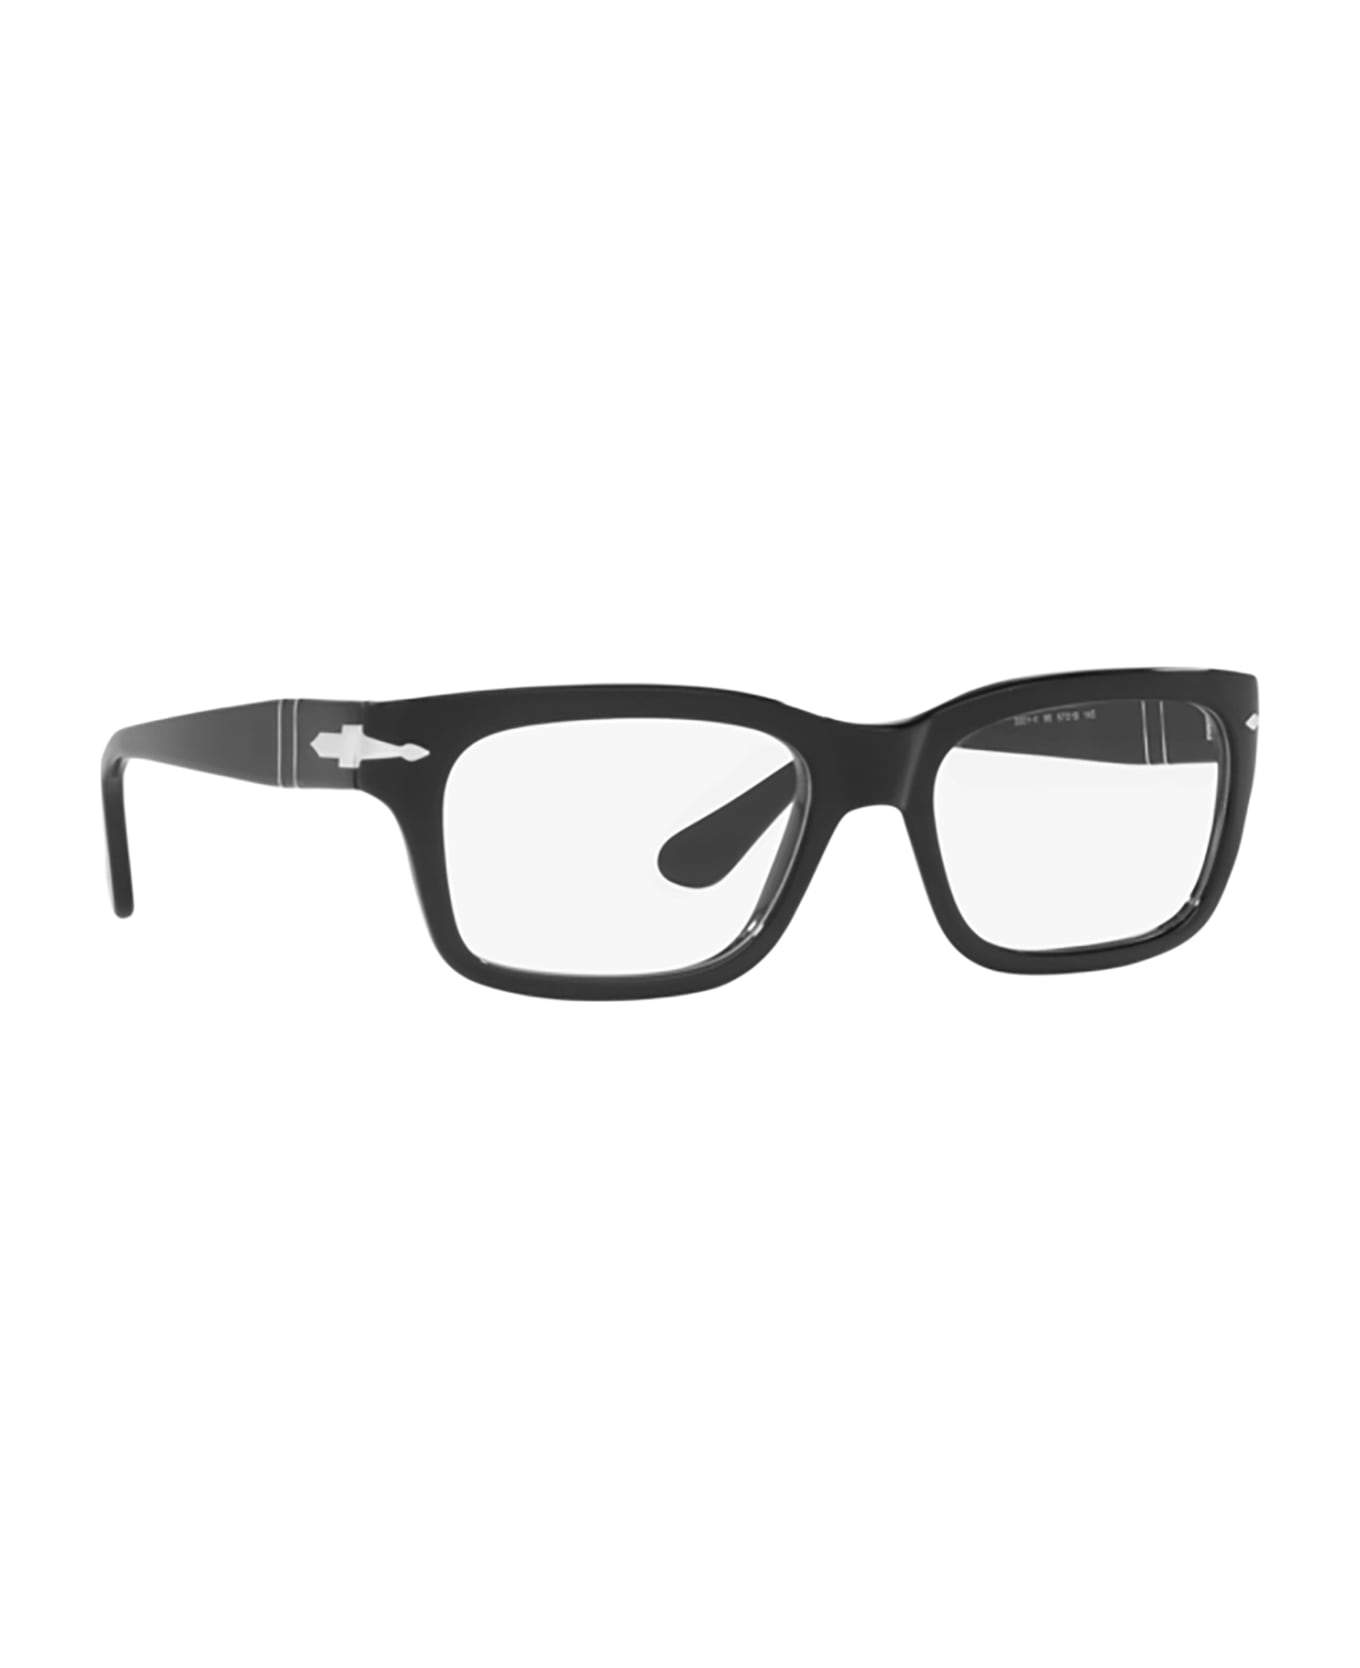 Persol Po3301v Havana Glasses - Havana アイウェア